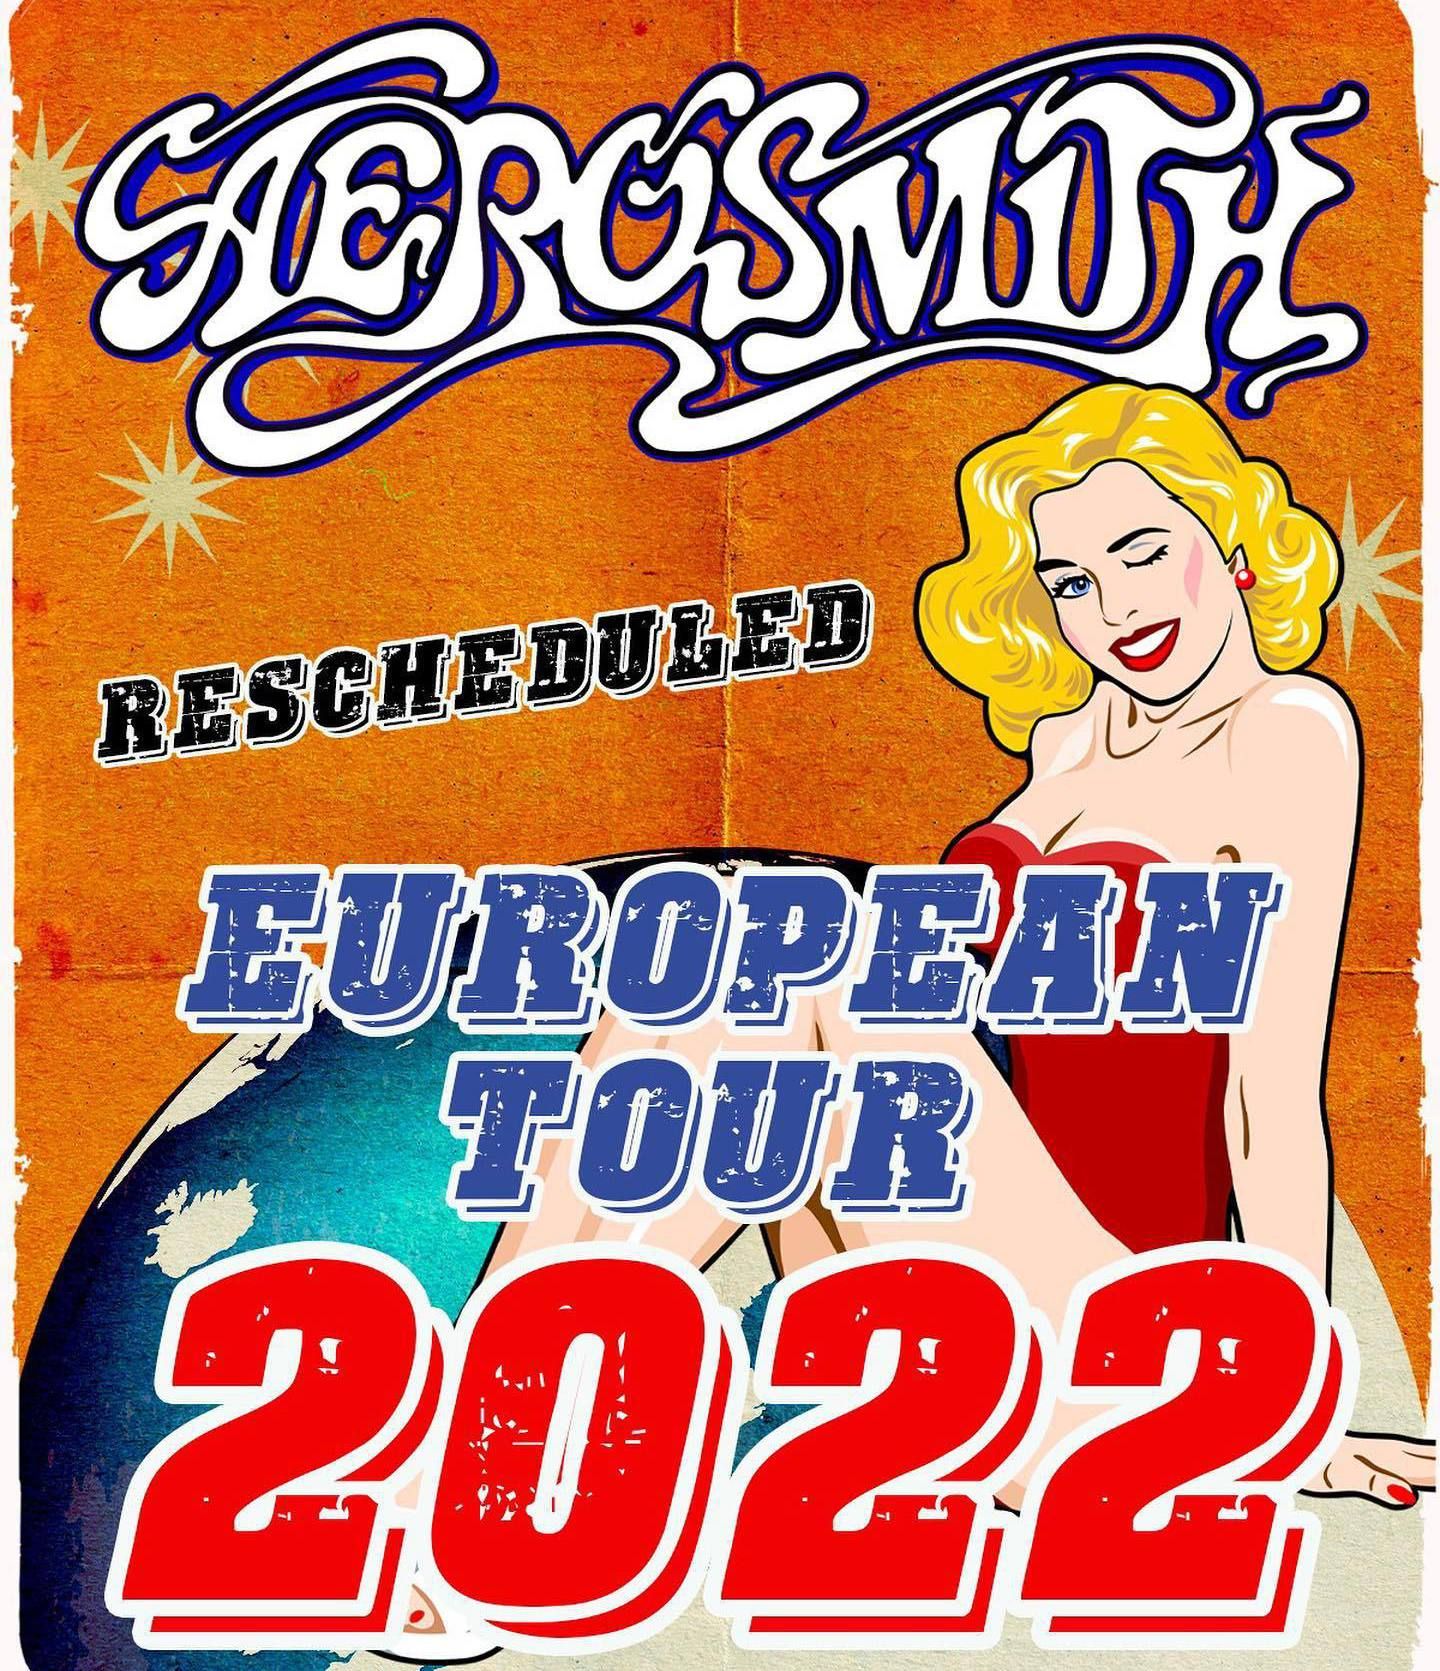 Europatour auf 2022 verschoben